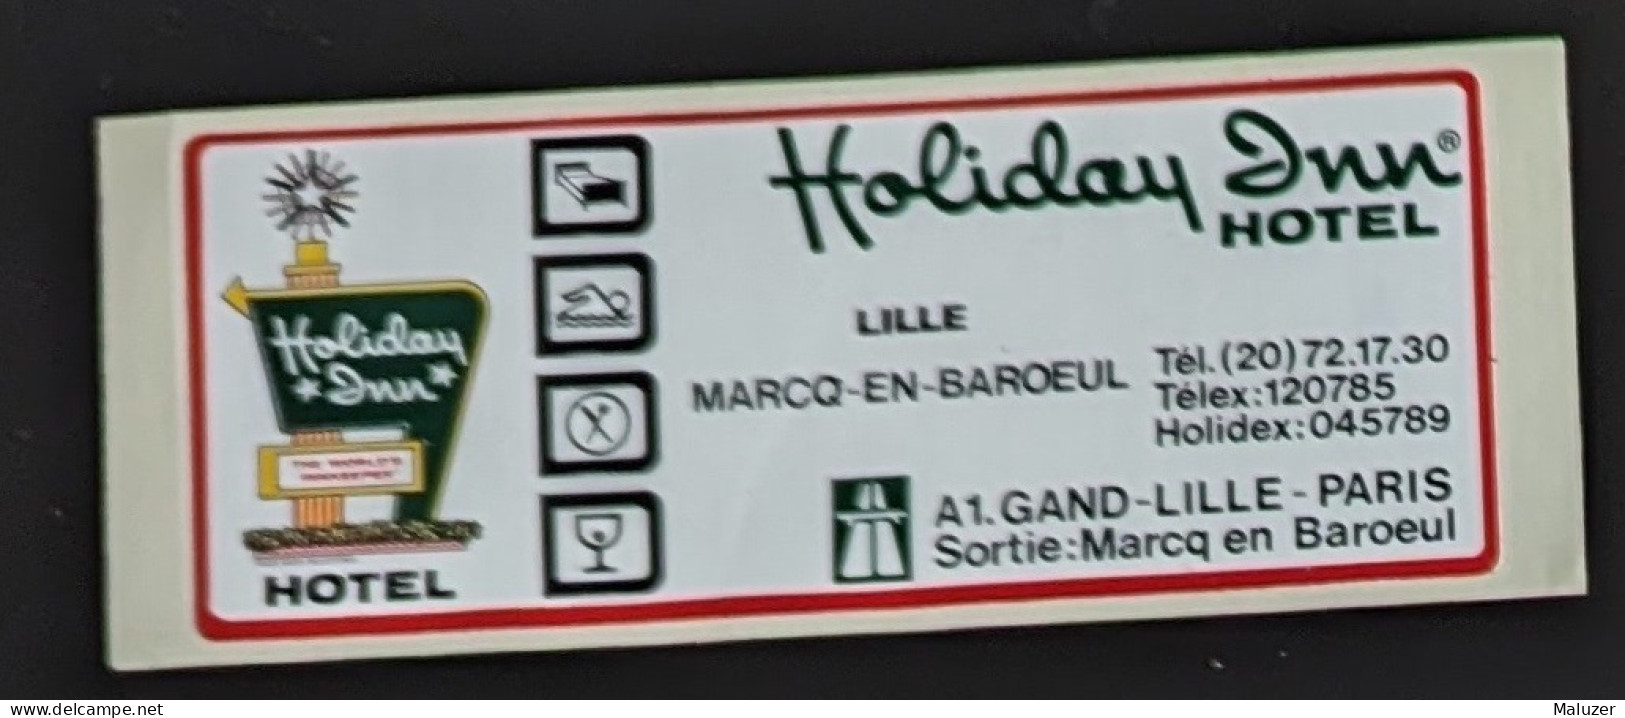 AUTOCOLLANT HOLIDAY INN - HÔTEL -LILLE MARCQ EN BAROEUL -59 NORD - Adesivi